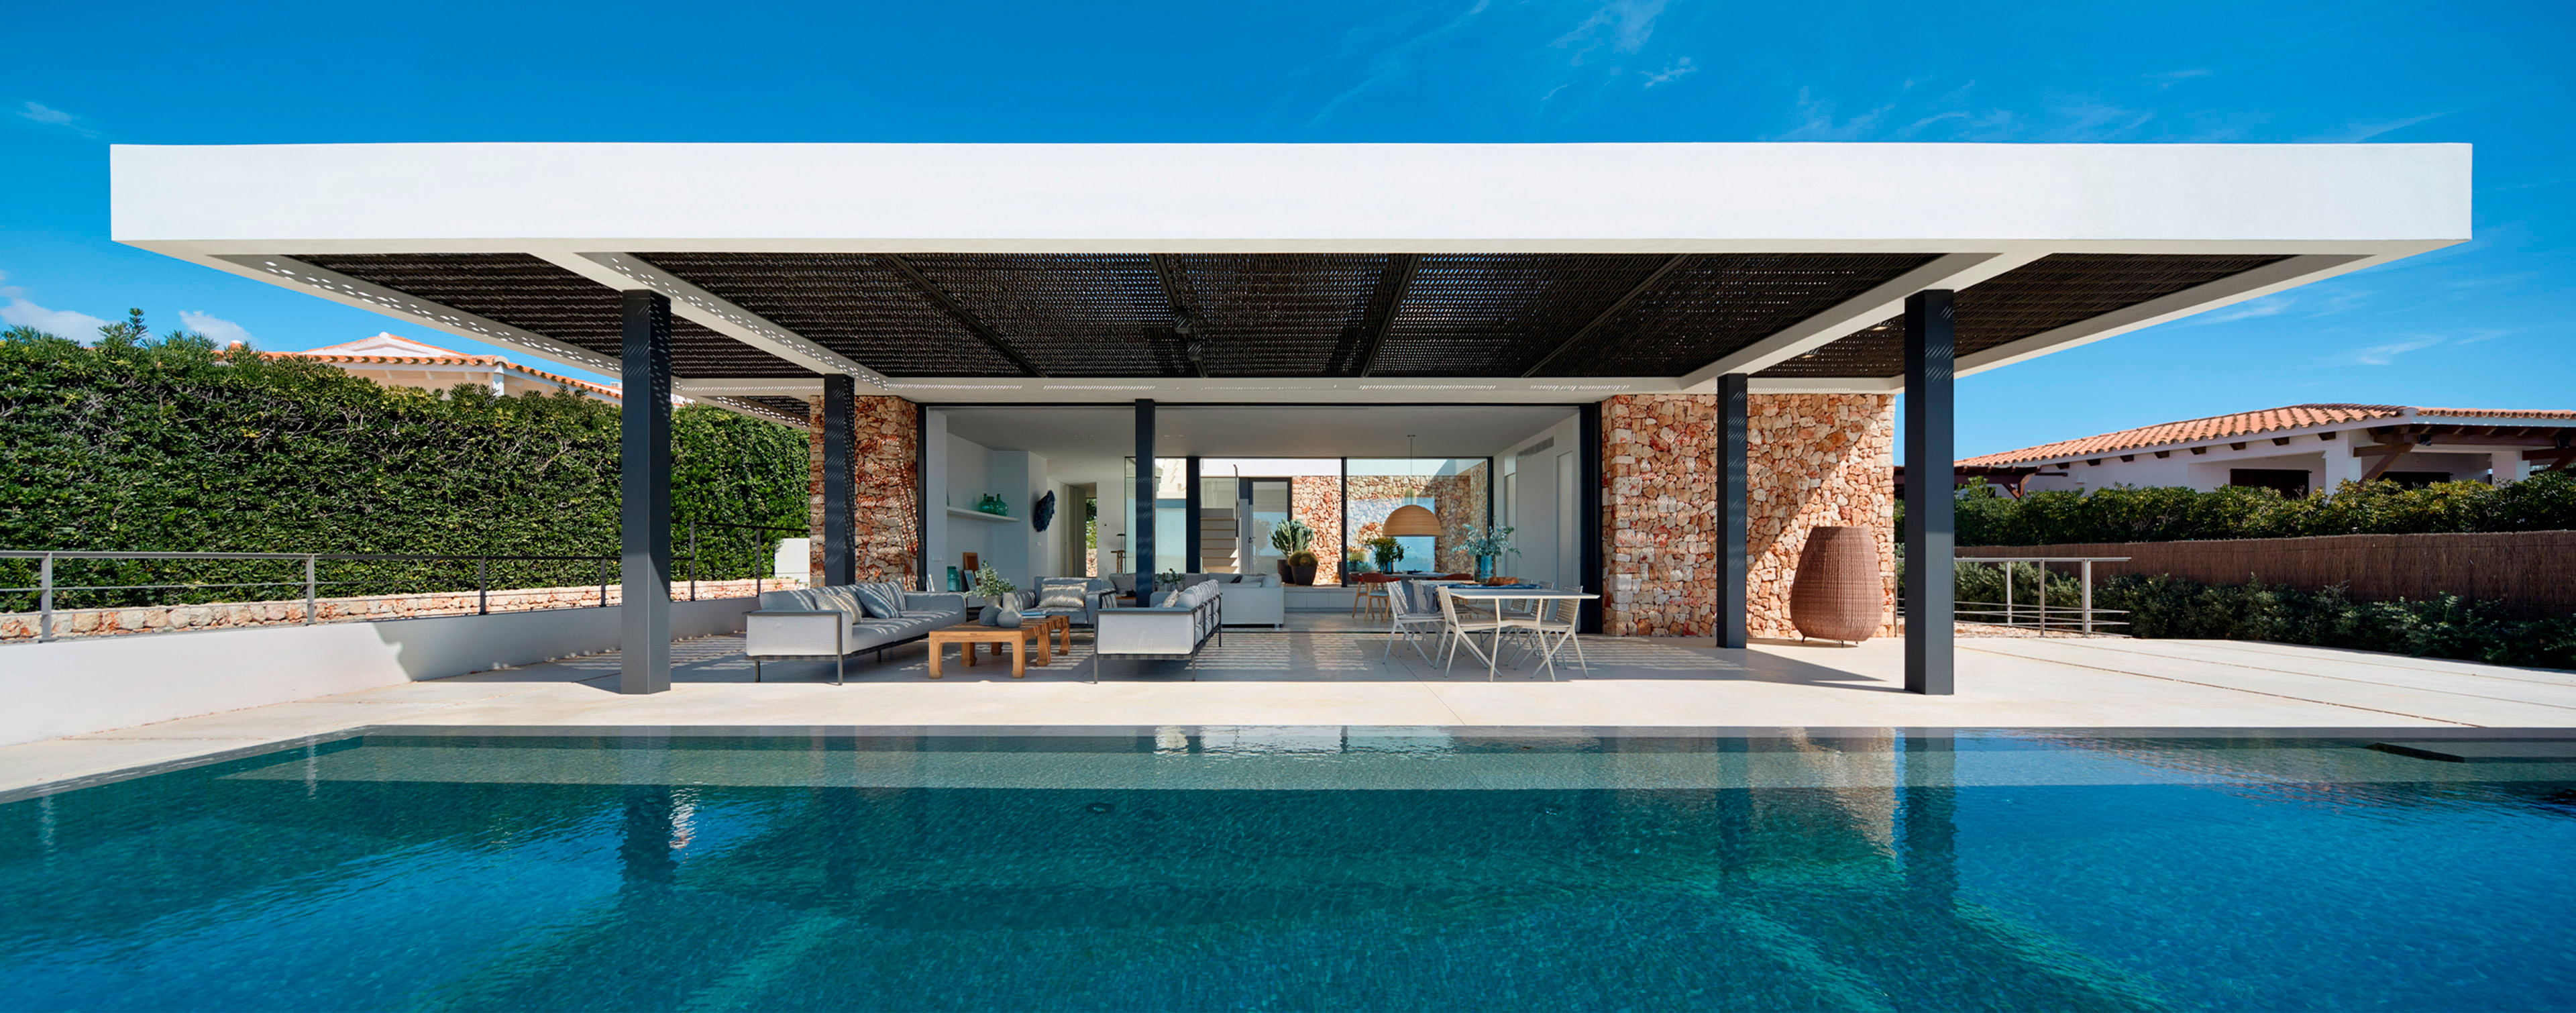 luv studio luxury architects menorca binibequer house IMG 01 - LUV Studio - Architecture & Design - Barcelona